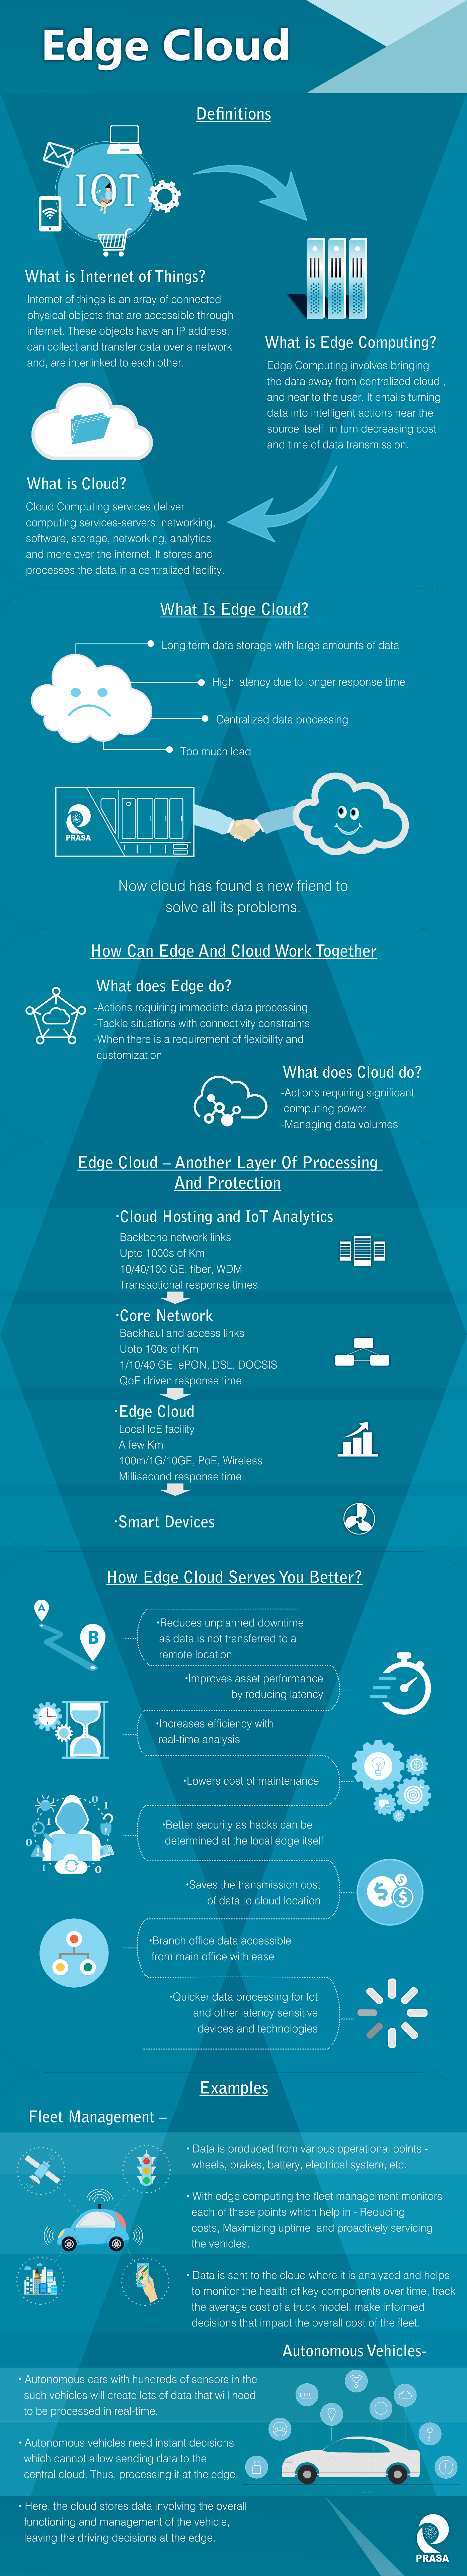 edge cloud infographic